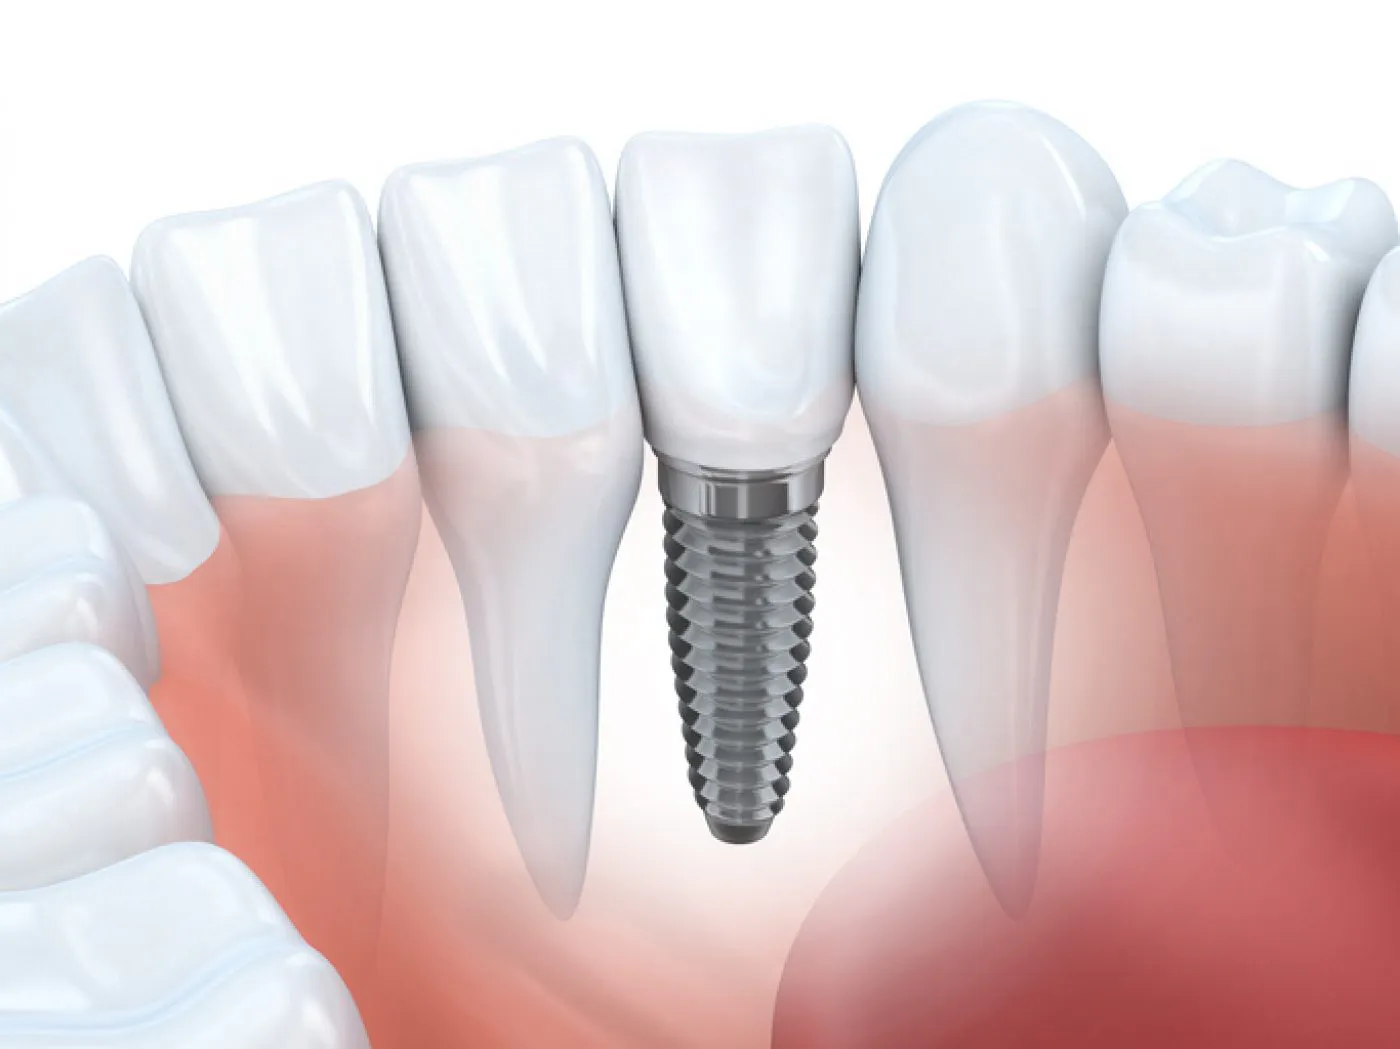 Single Implant Portman Dental And Implant Clinic Maidenhead